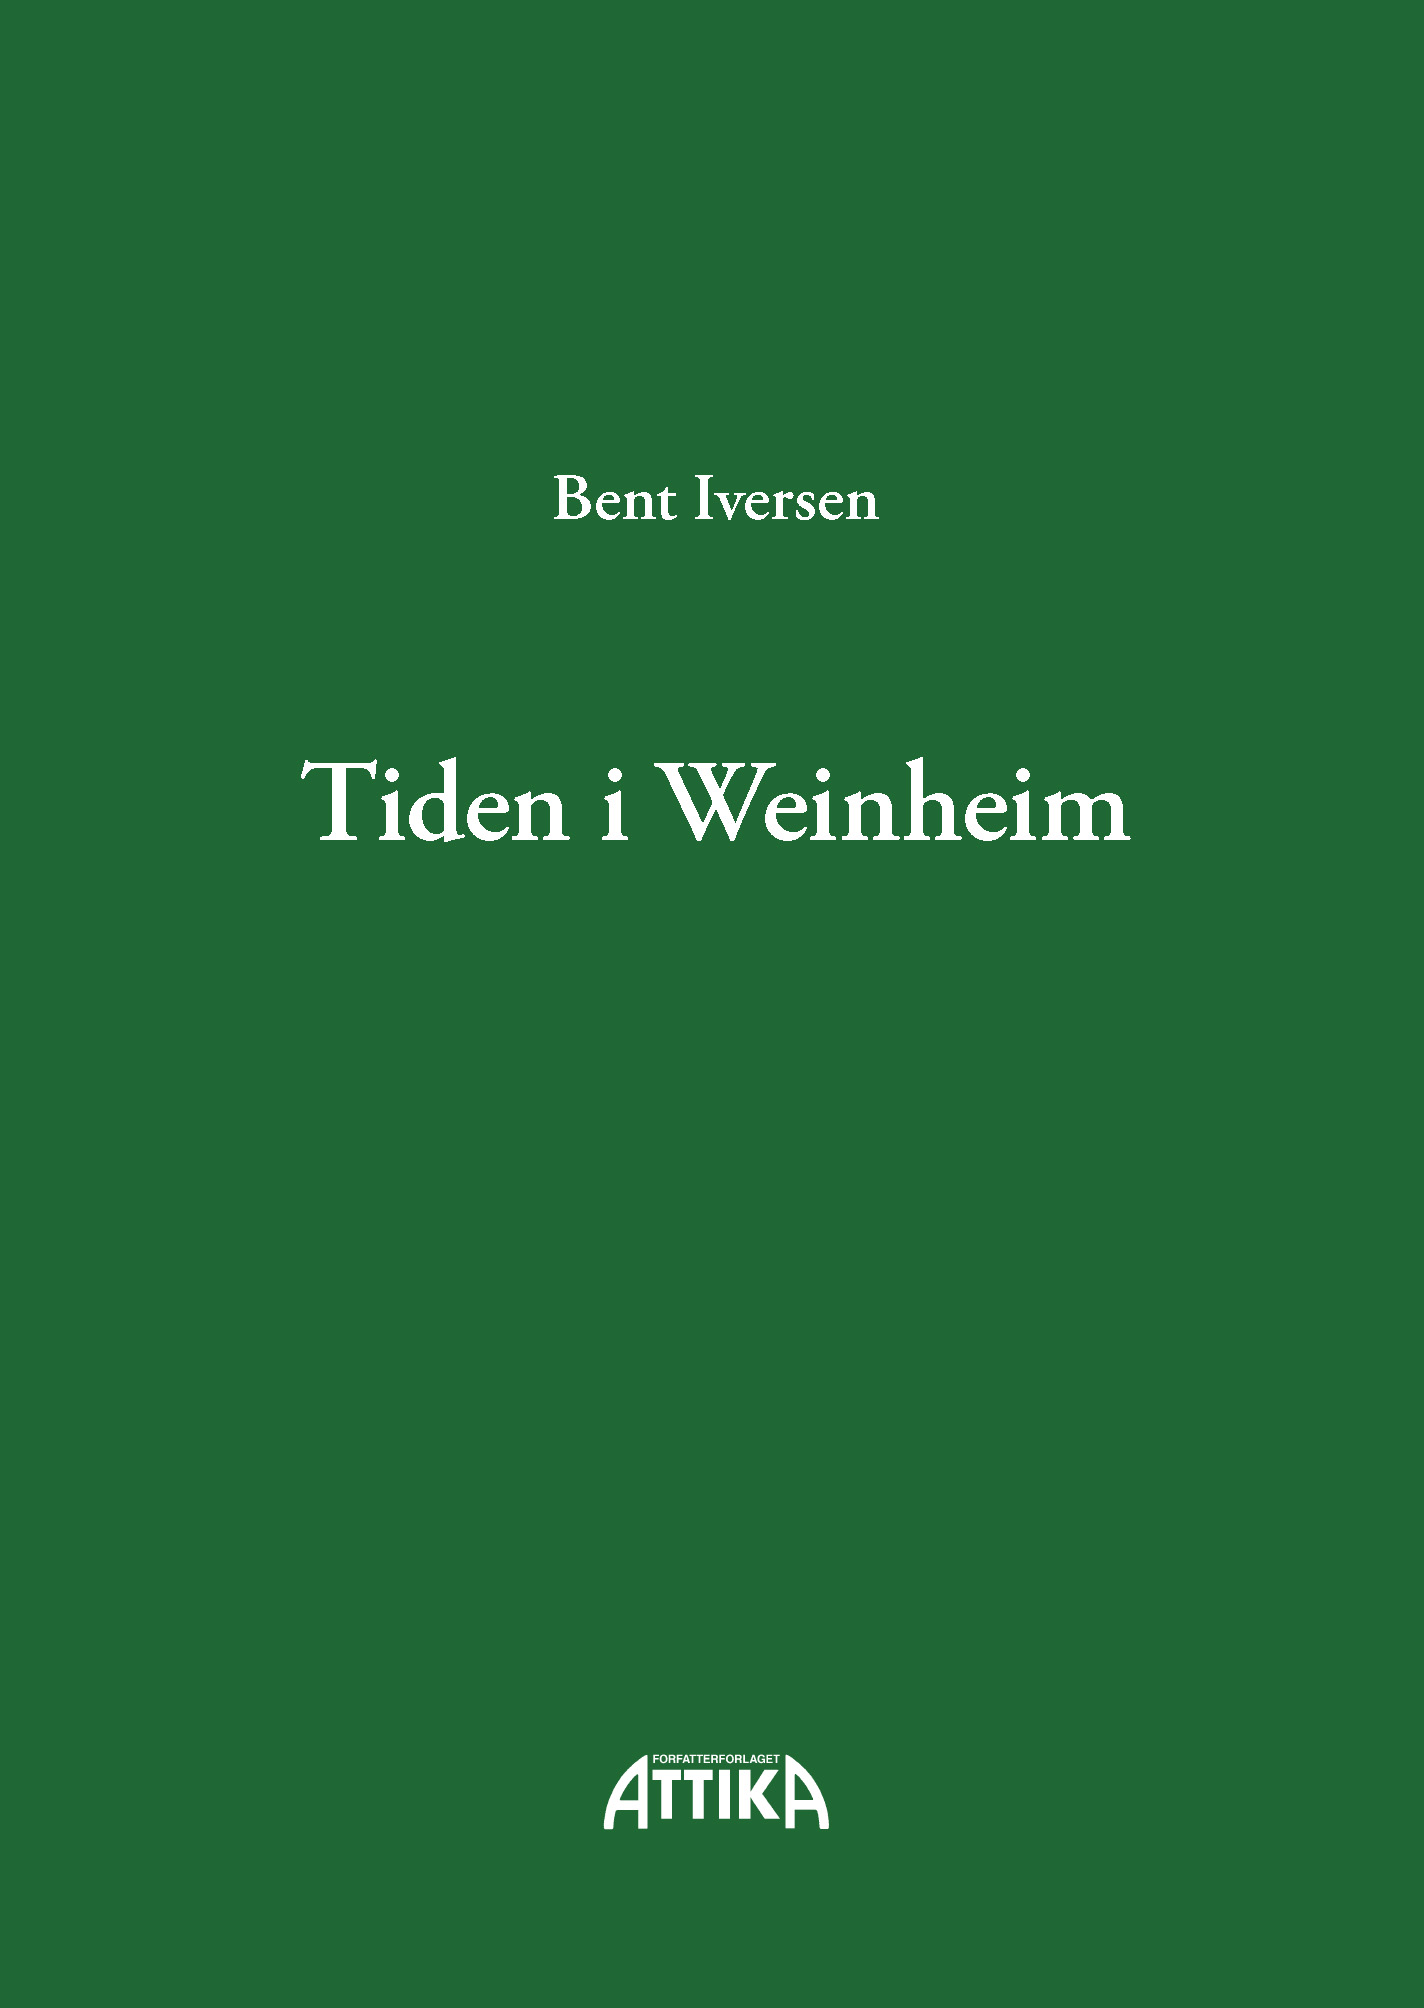 Bent Iversen: Tiden i Weinheim